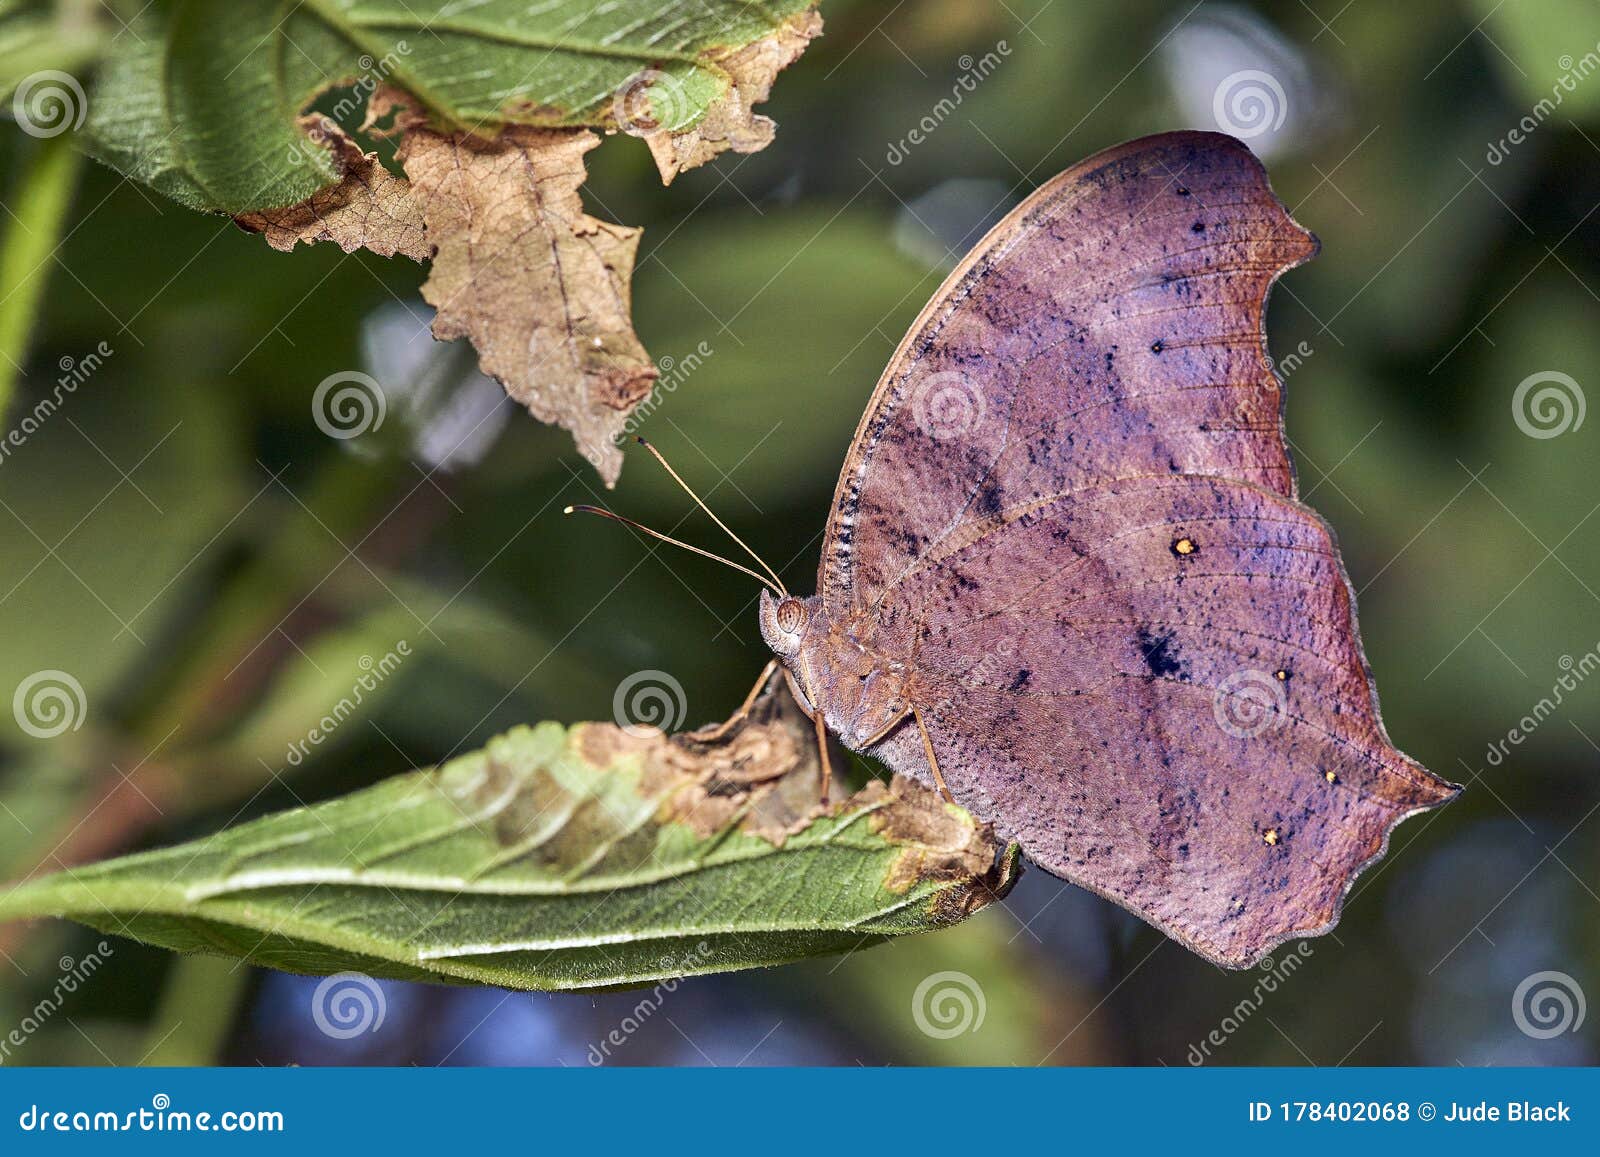 melanitis leda or evening brown butterfly